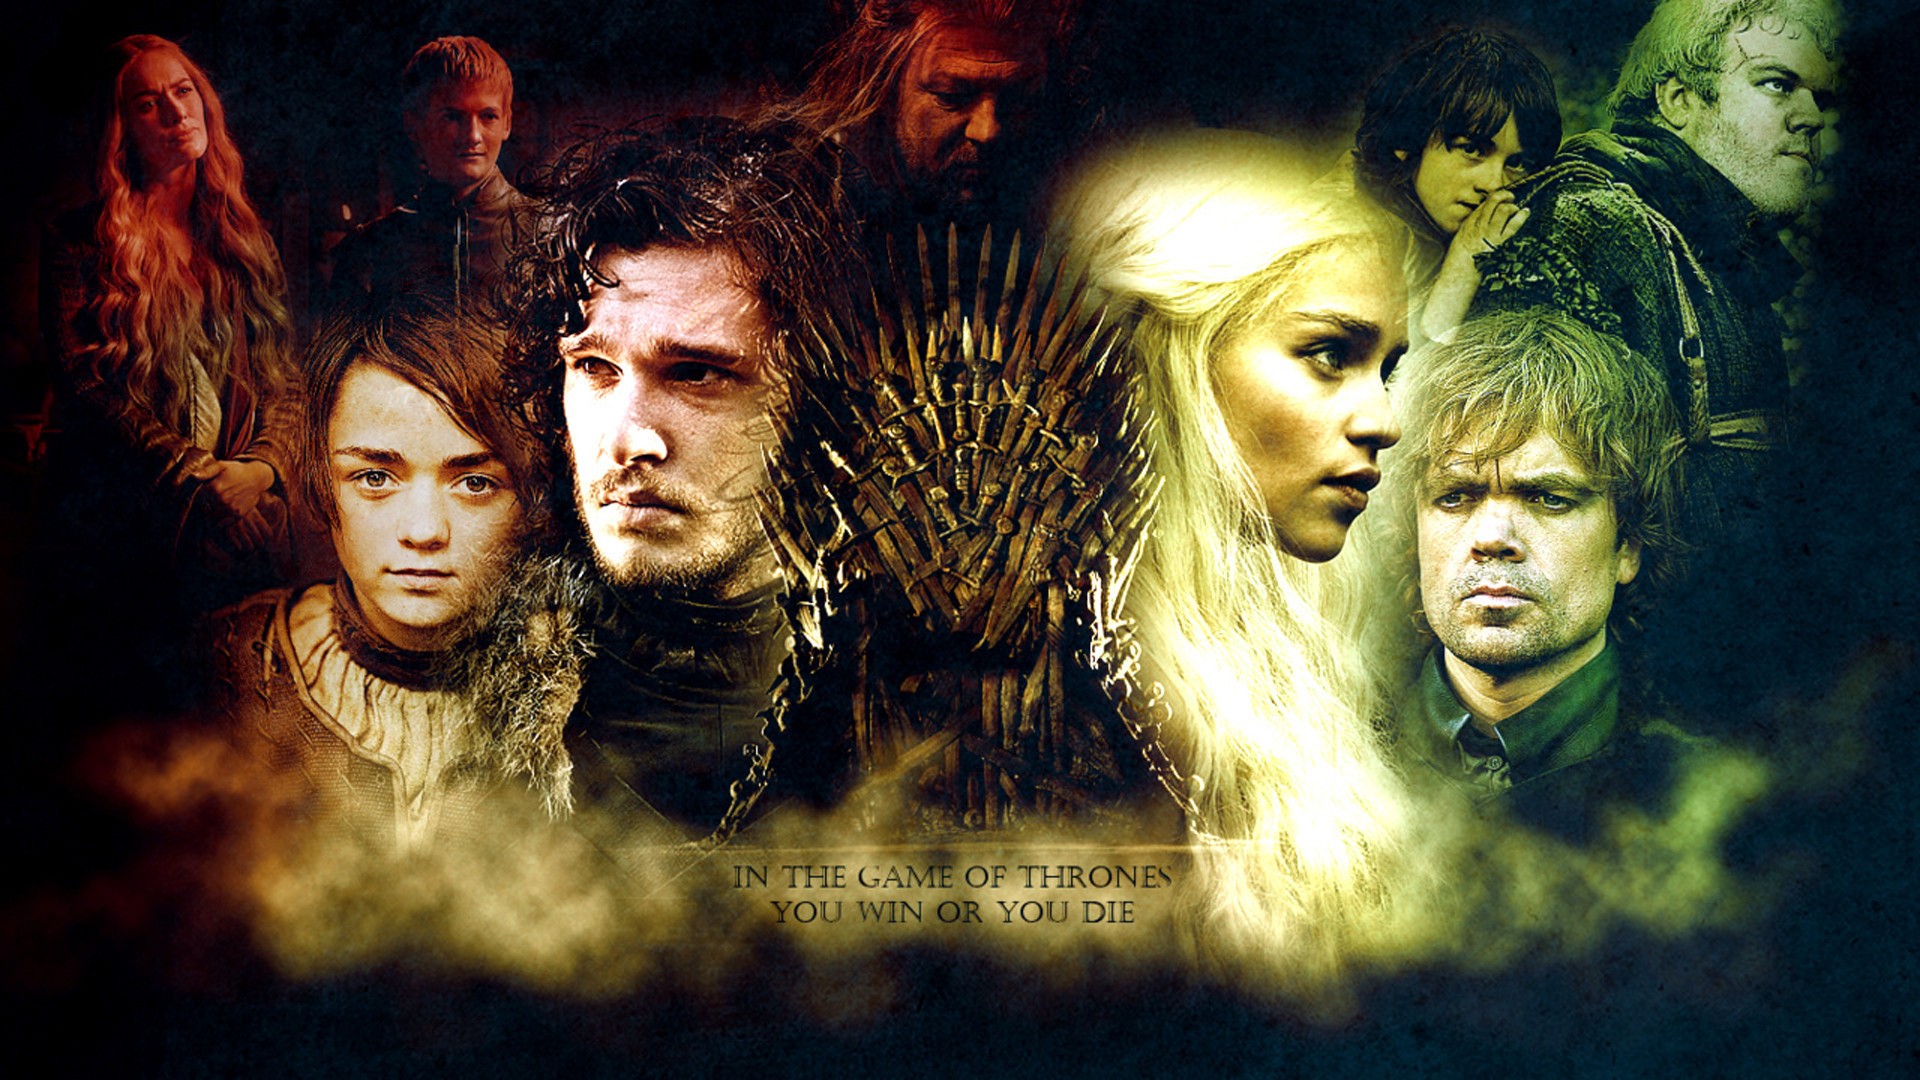 Game Of Thrones, Quote, Cersei Lannister, Arya Stark, Iron Throne, Tyrion Lannister, Brandon Stark, Jon Snow, Daenerys Targaryen, Ned Stark, Joffrey Baratheon Wallpaper